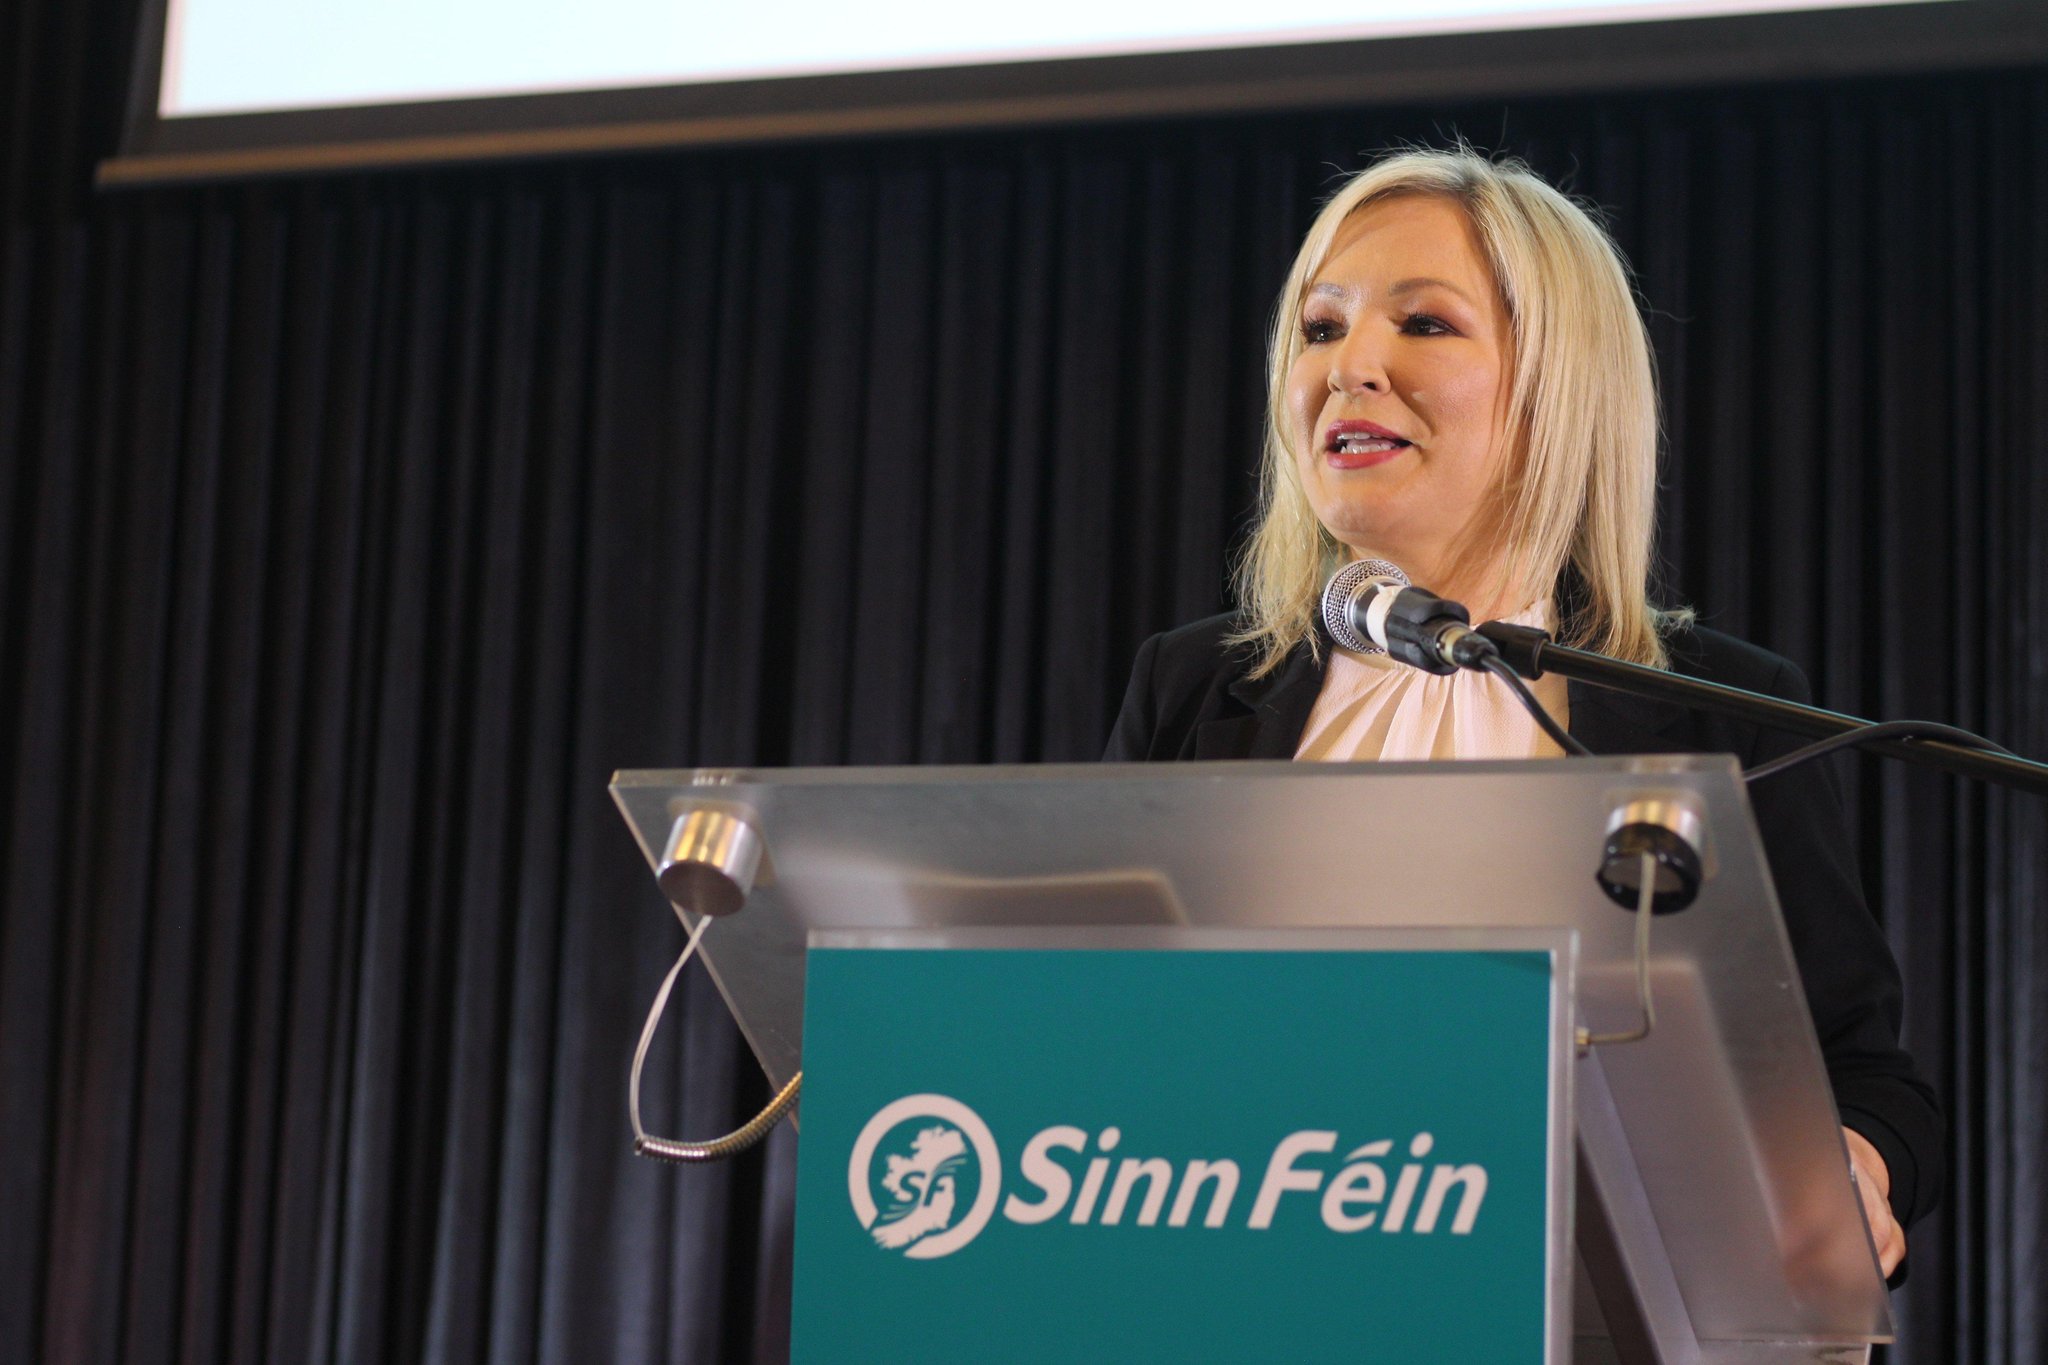 Poll shows surge for Alliance but Sinn Fein still in lead ahead of election